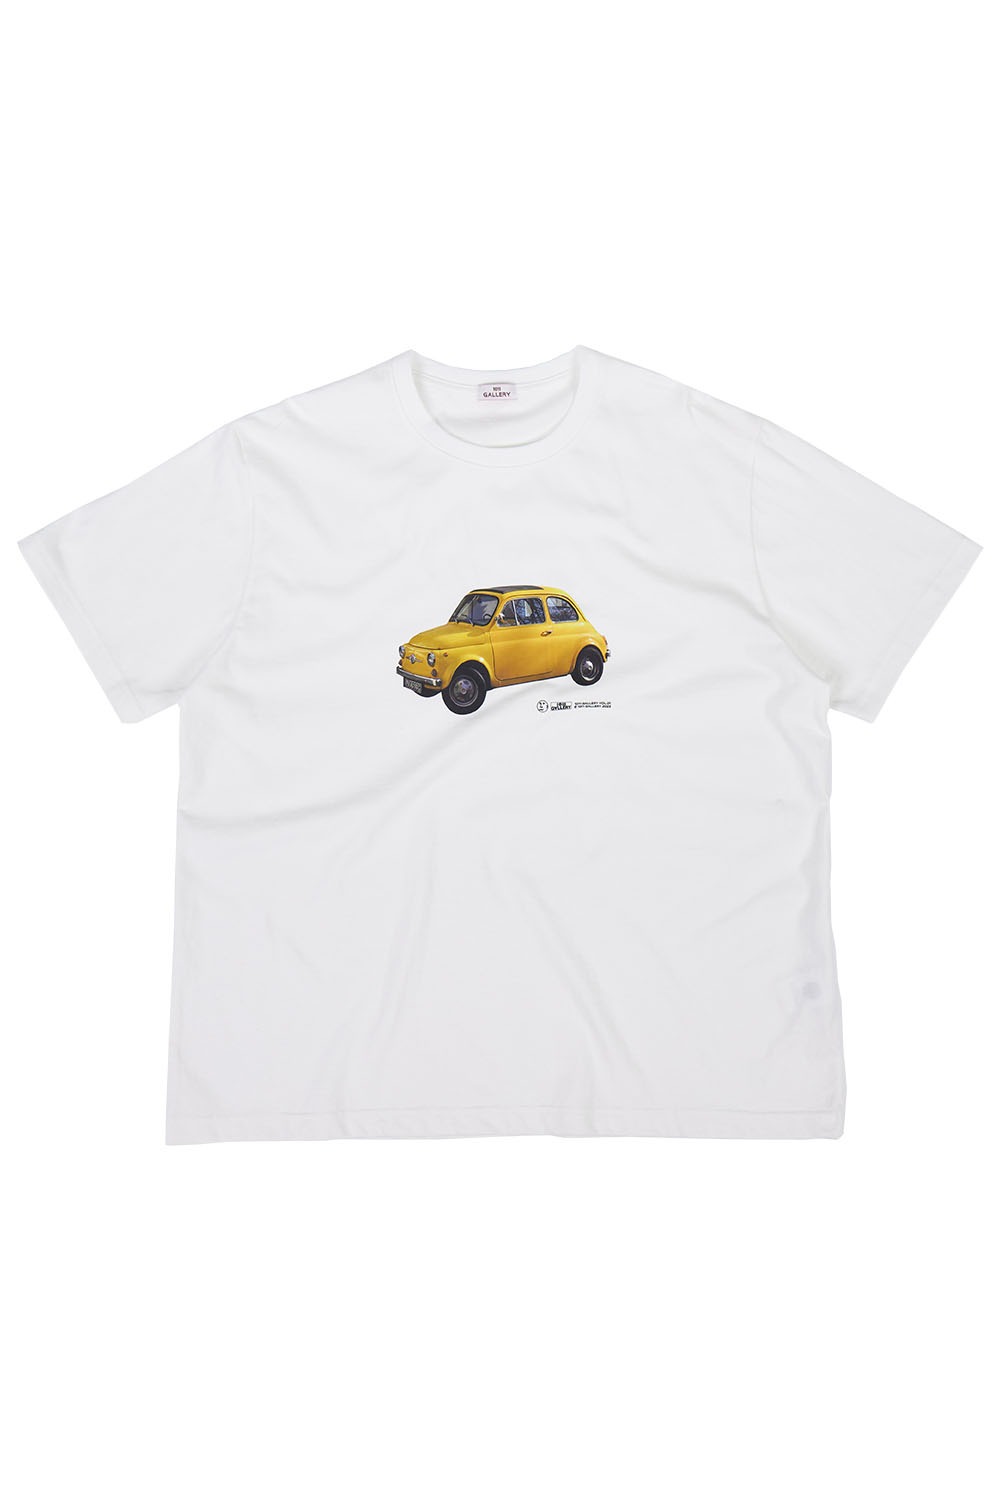 Gallery Yellow Car T-shirt - White